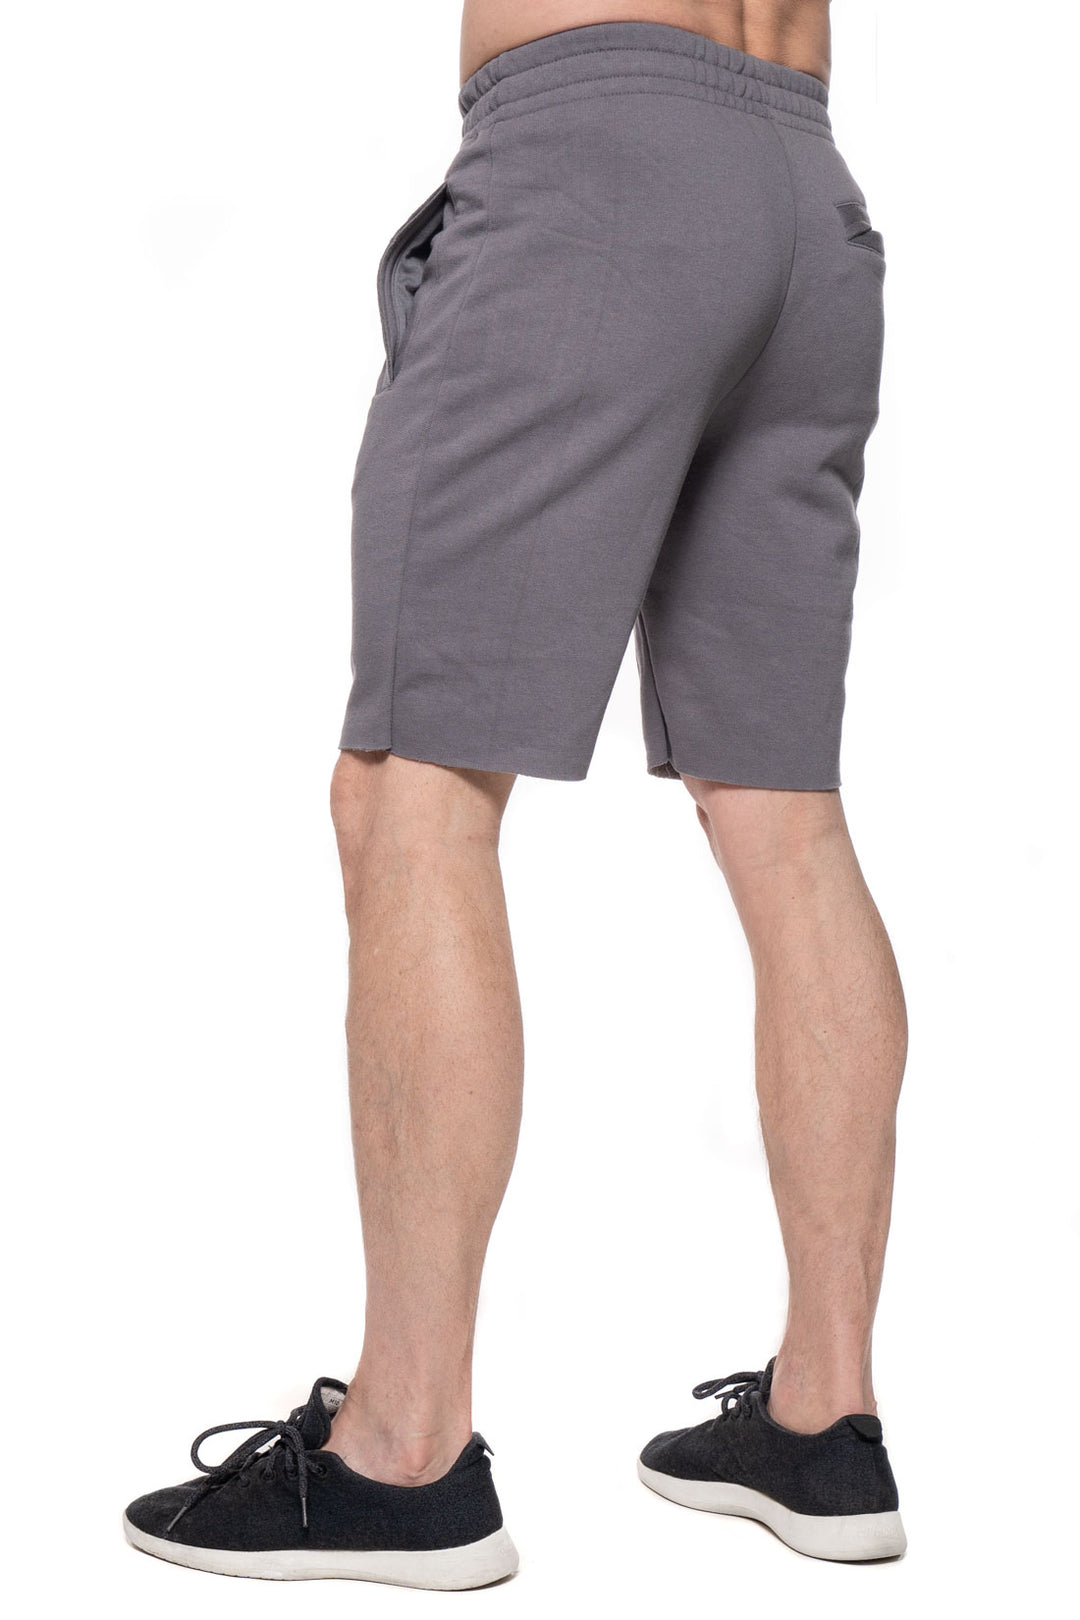 grey men's bamboo shorts